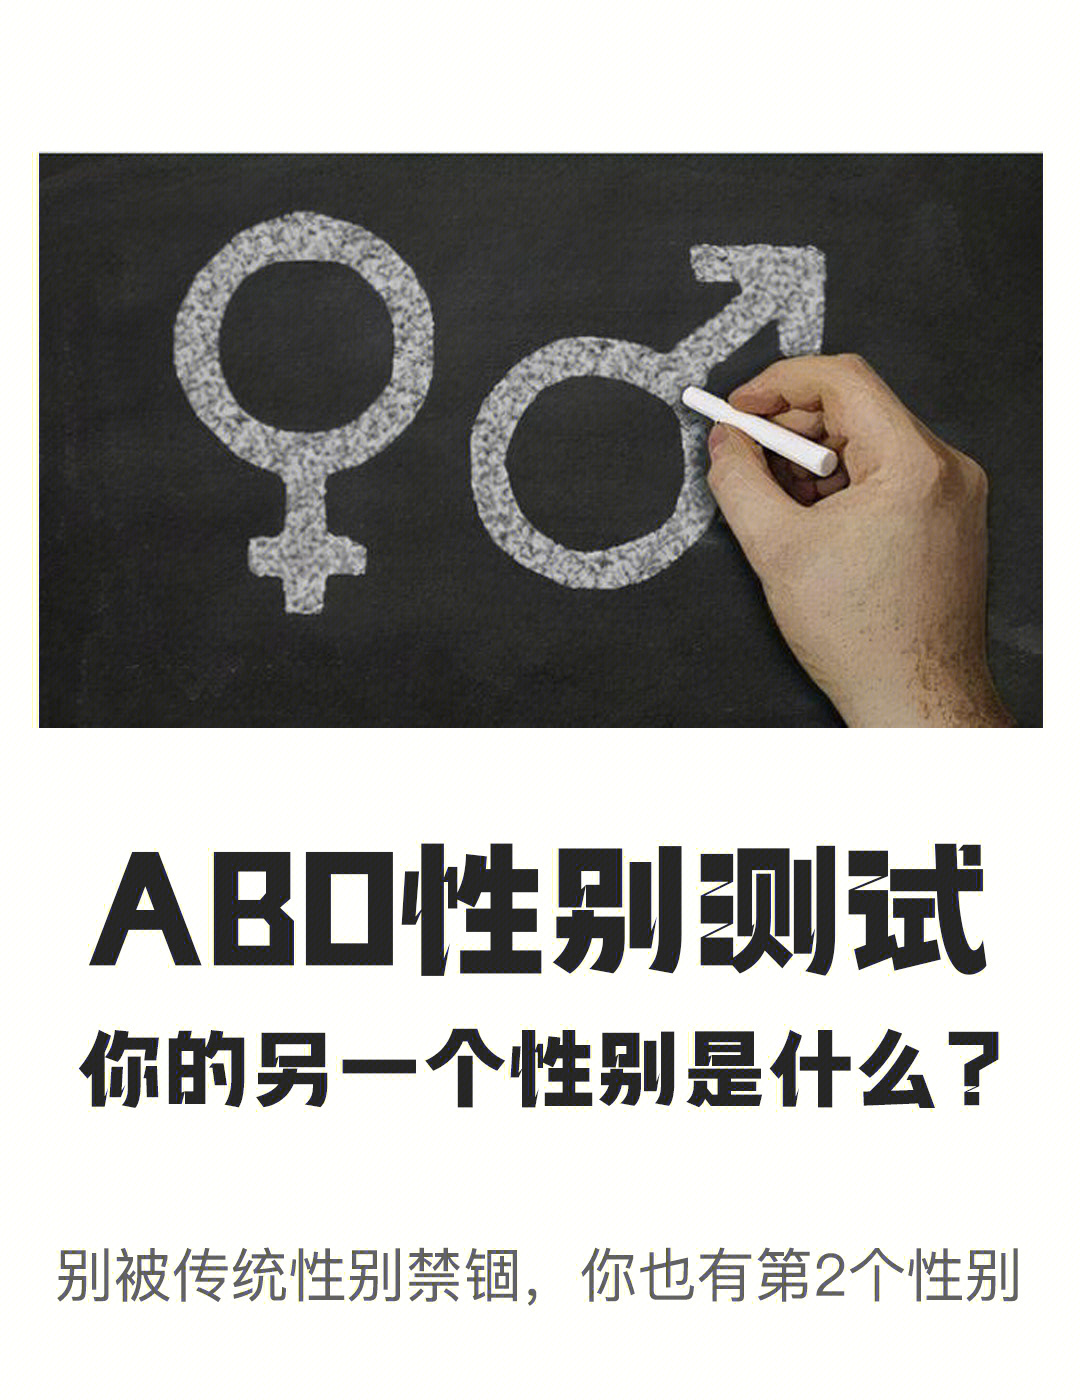 abo性别测试你的另一个性别是什么